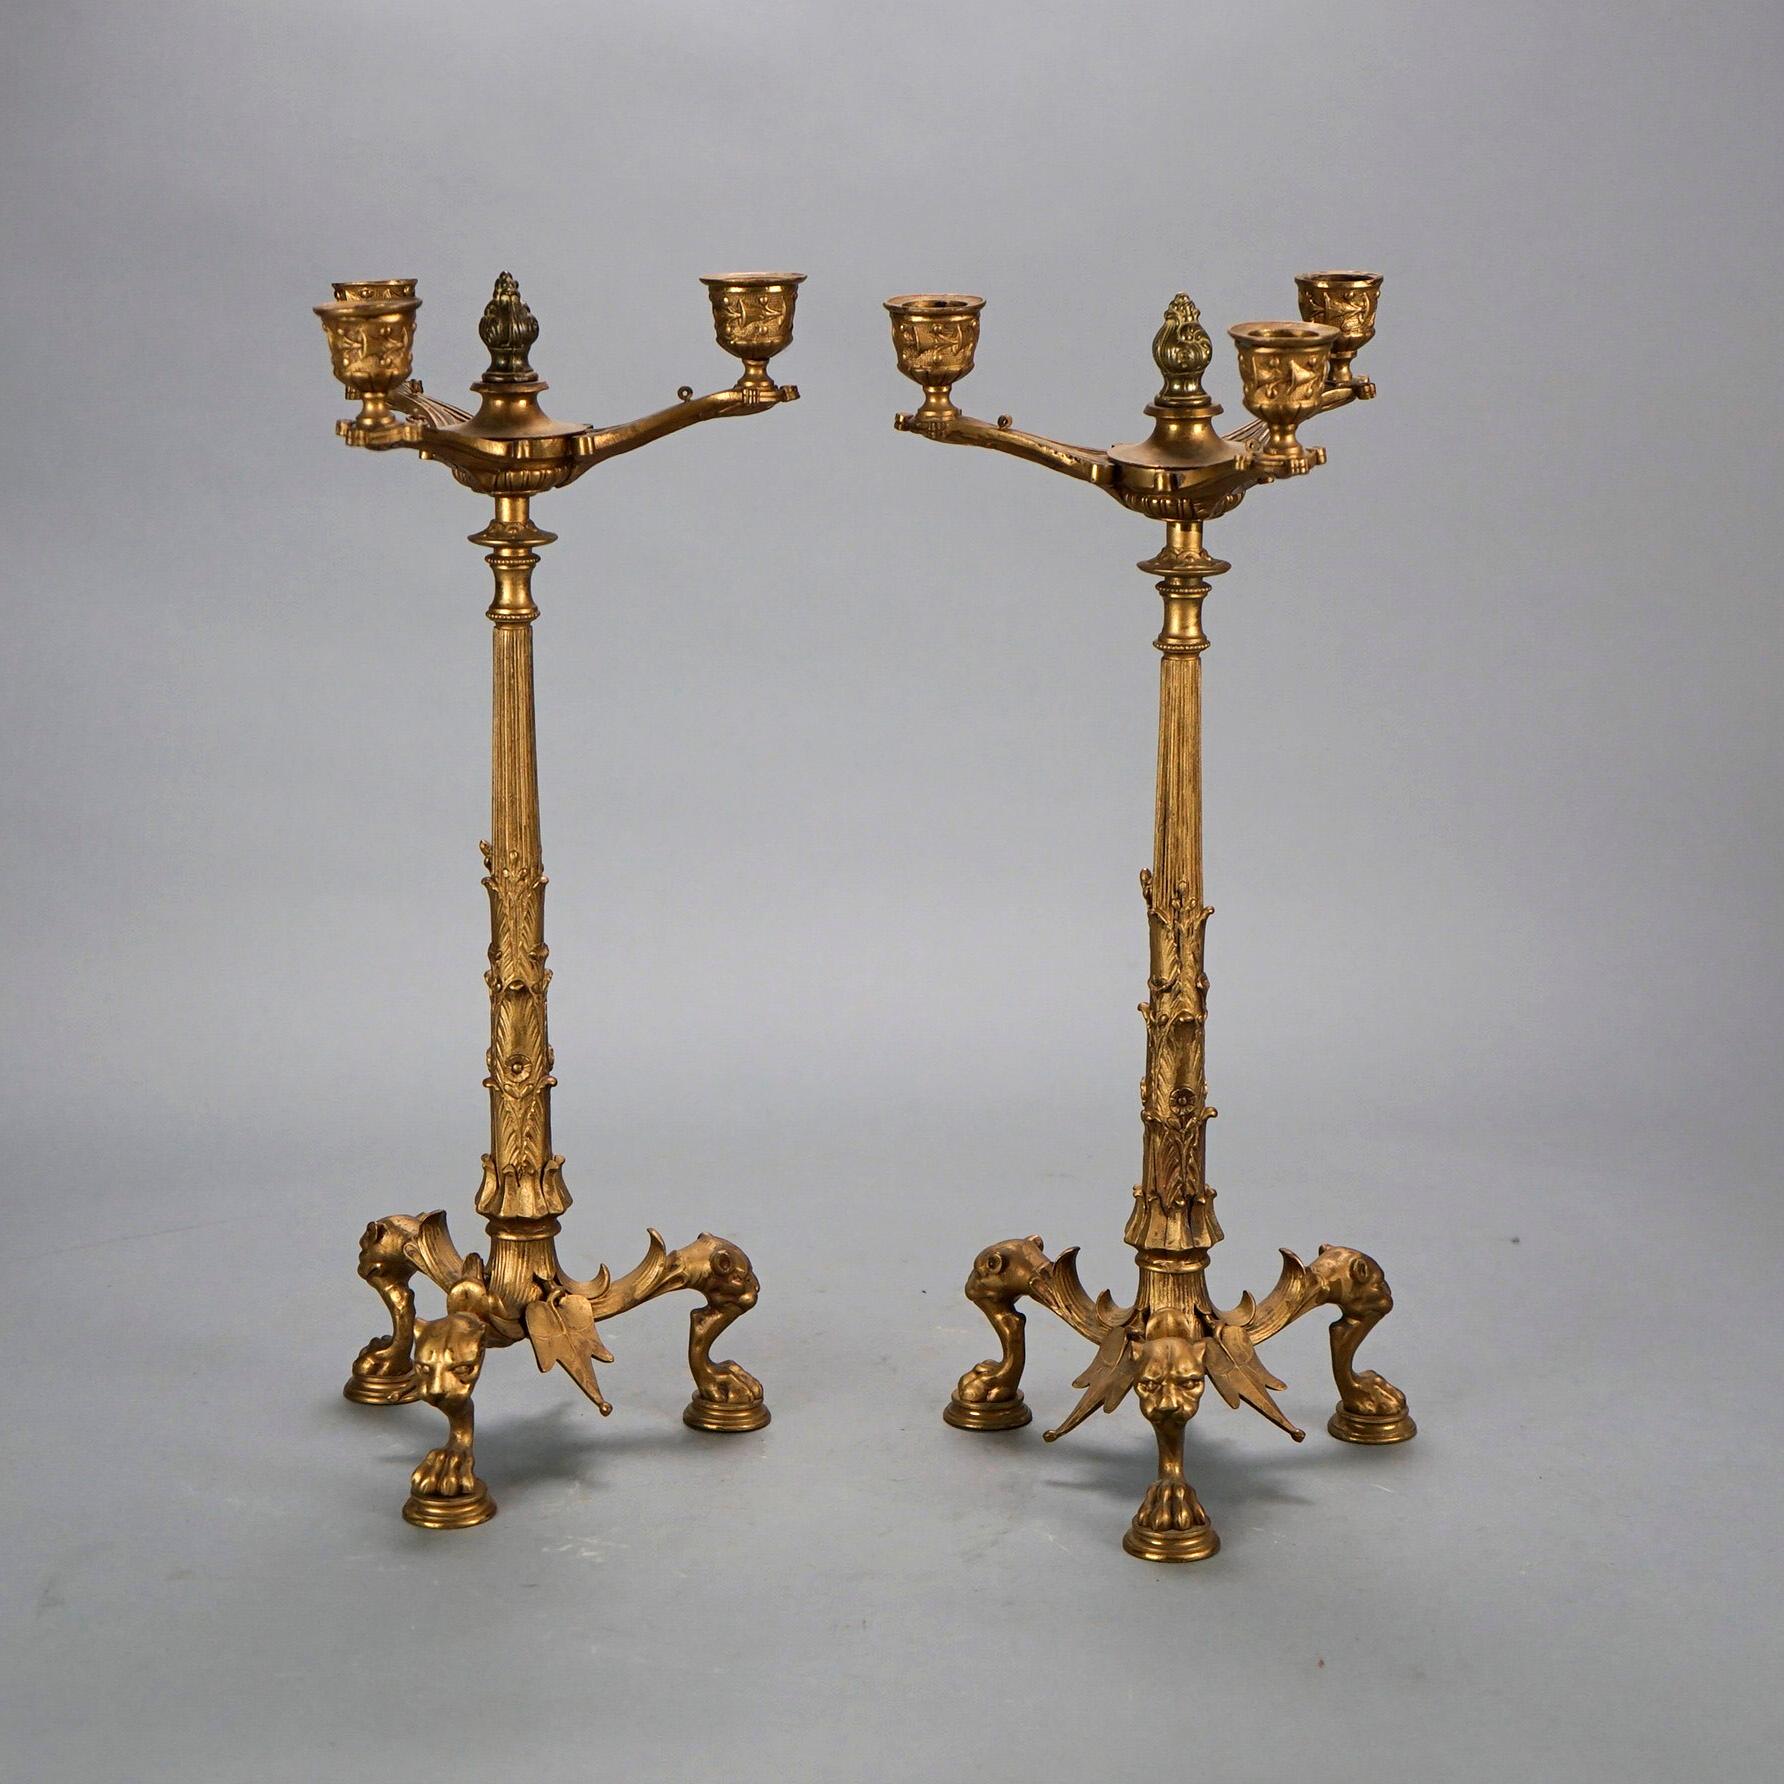 Cast Antique French Empire Gilt Bronze Figural Candlesticks 19th C